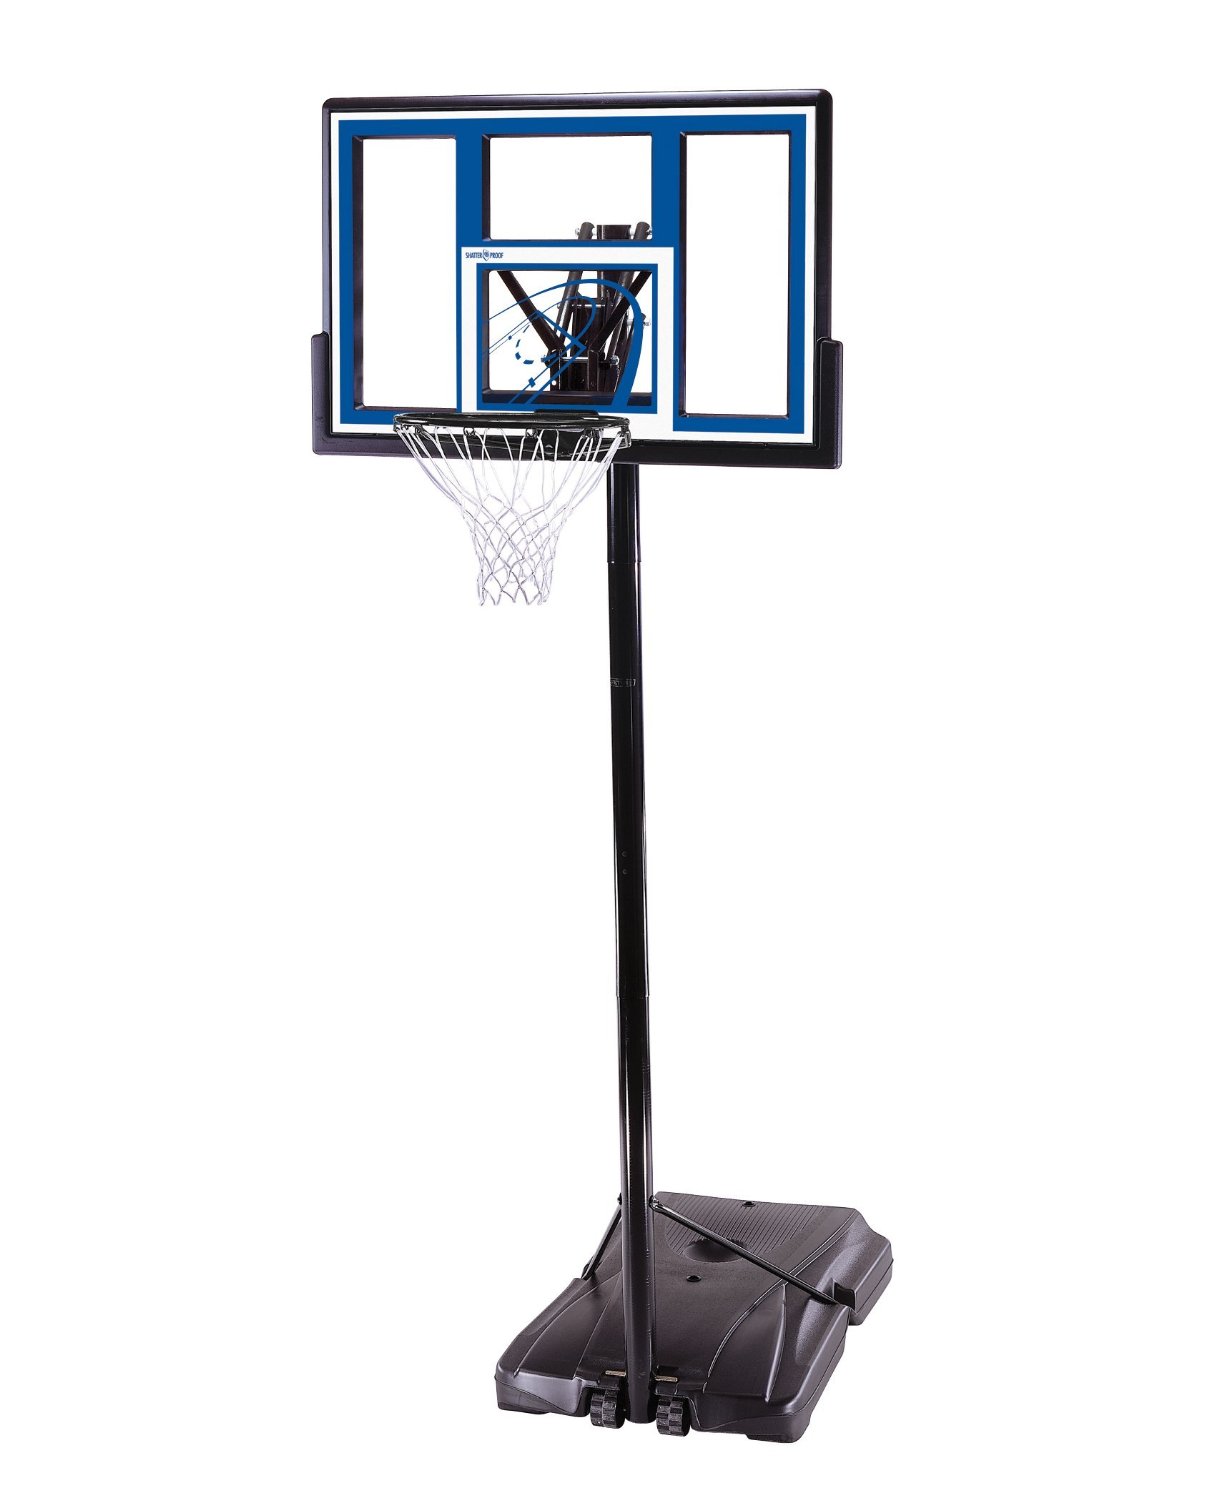 Amazon.com : Lifetime 1531 Portable Basketball System, 48 Inch ...